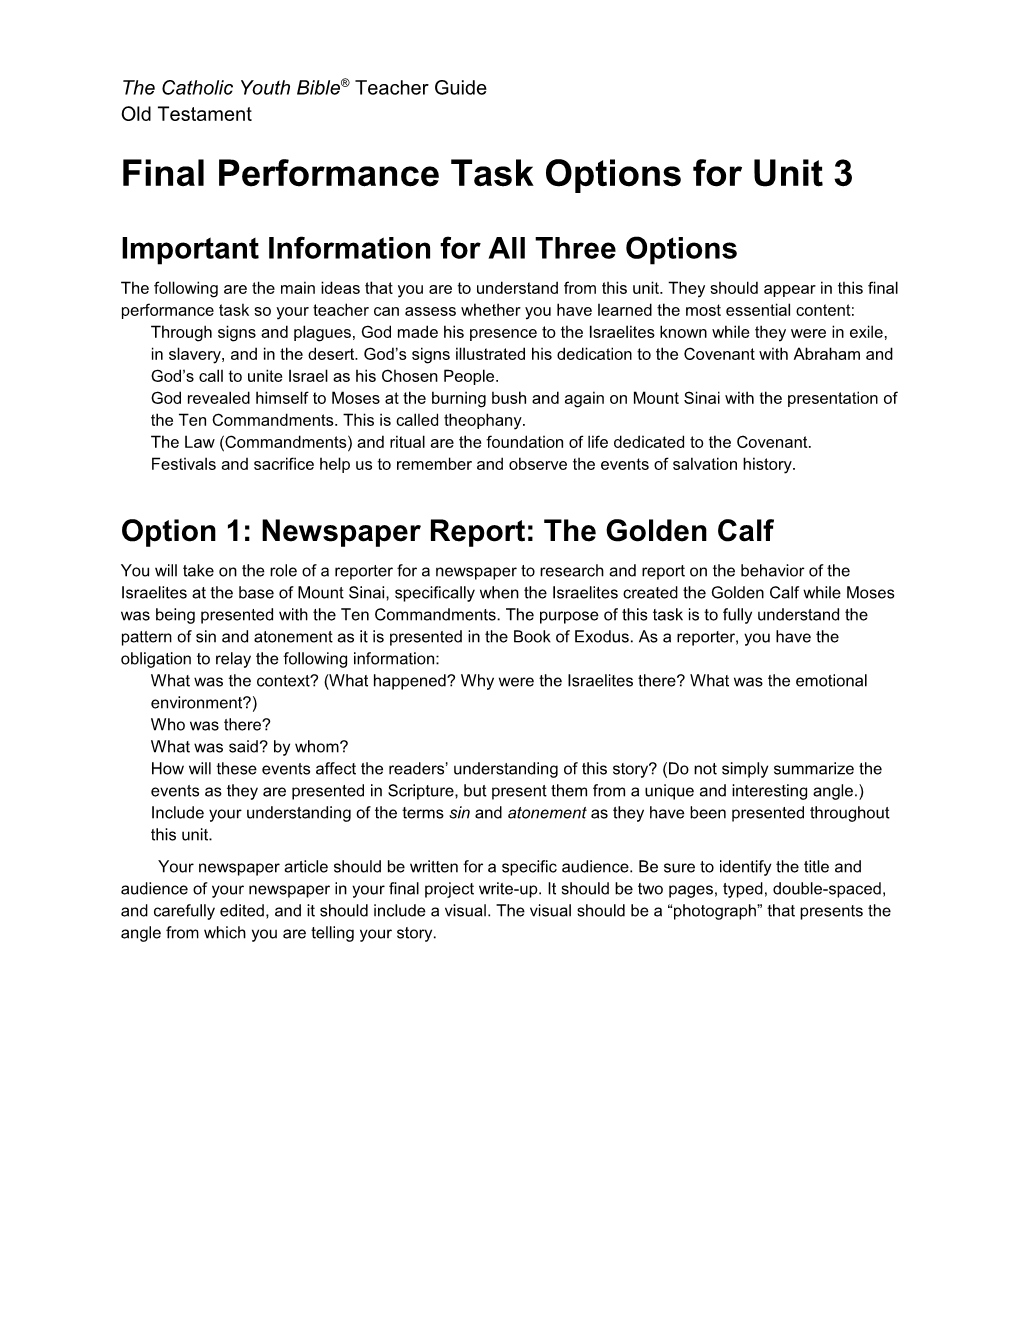 Final Performance Task Optionsfor Unit 3